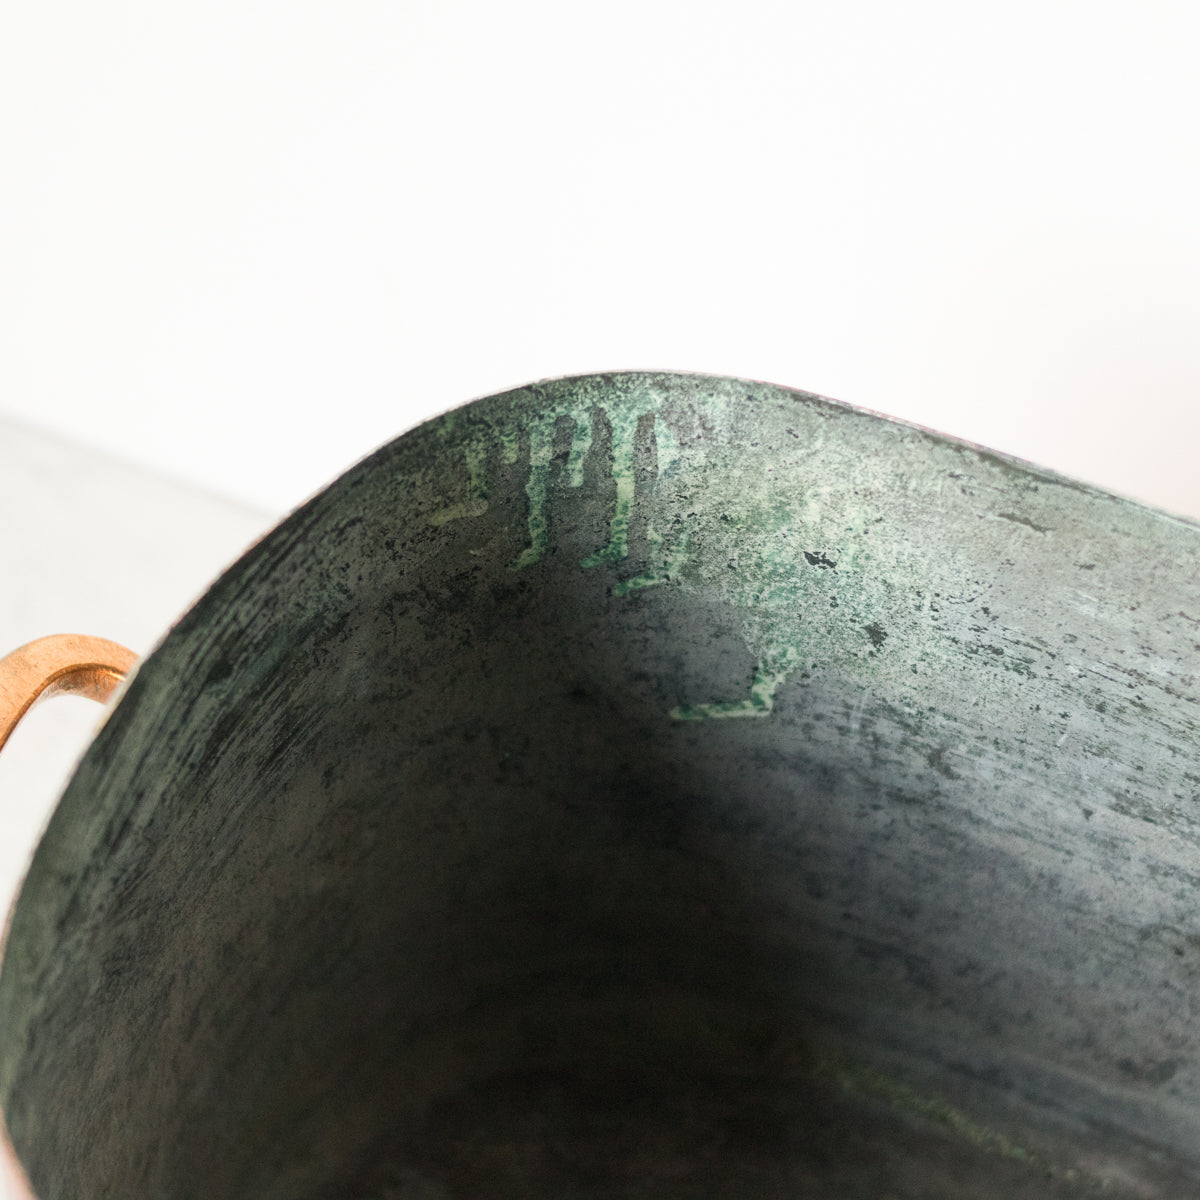 Vintage Re-Tinned Copper Pot, elsie green